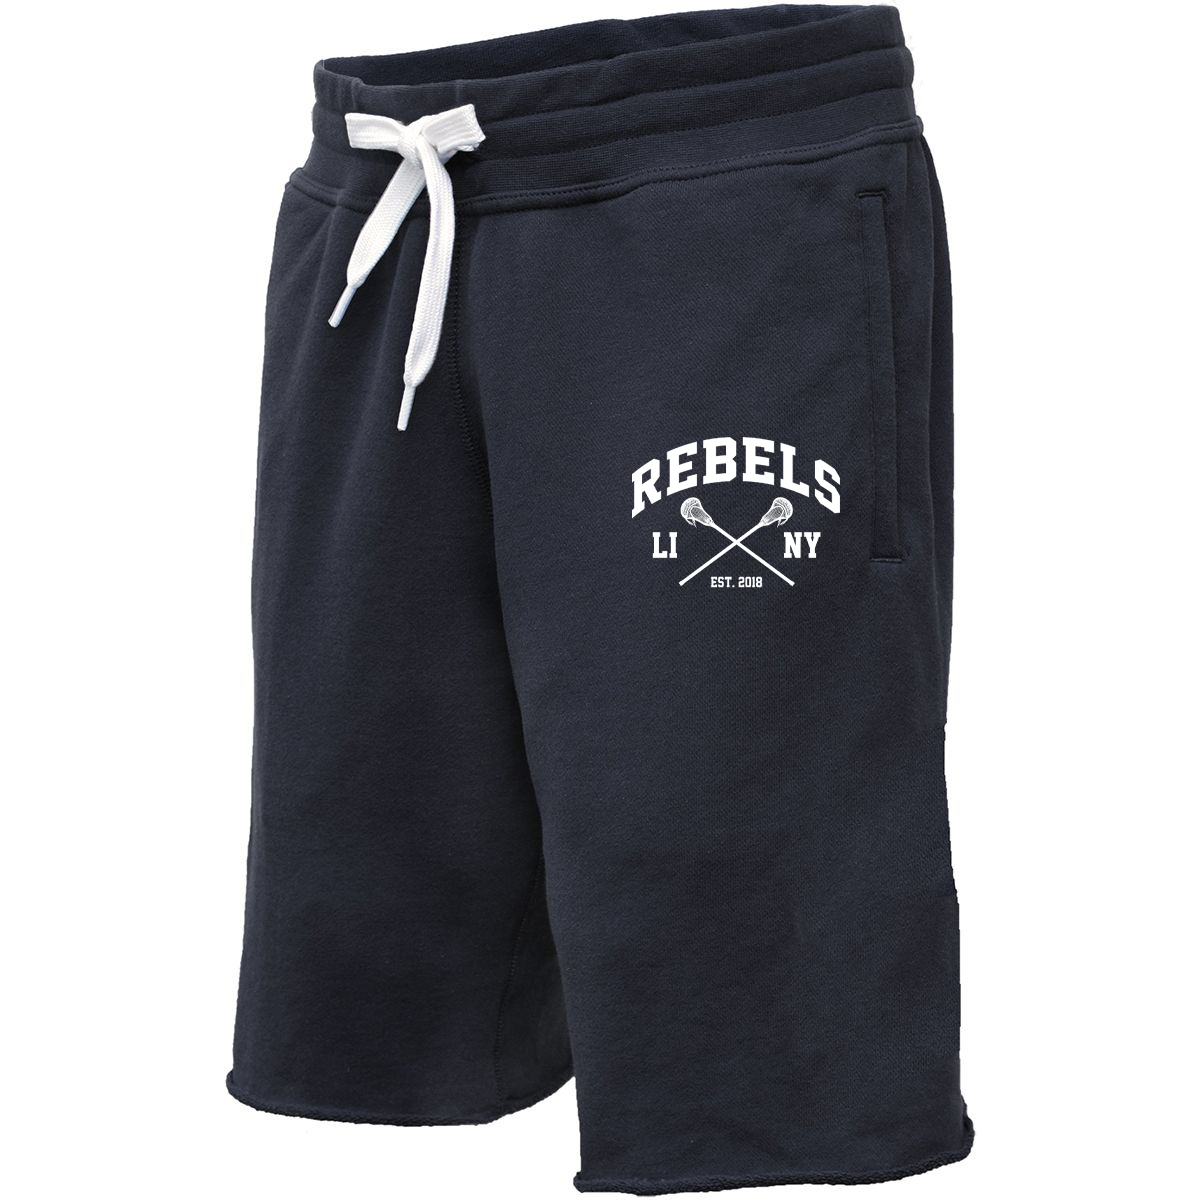 Rebels Lacrosse Sweatshort